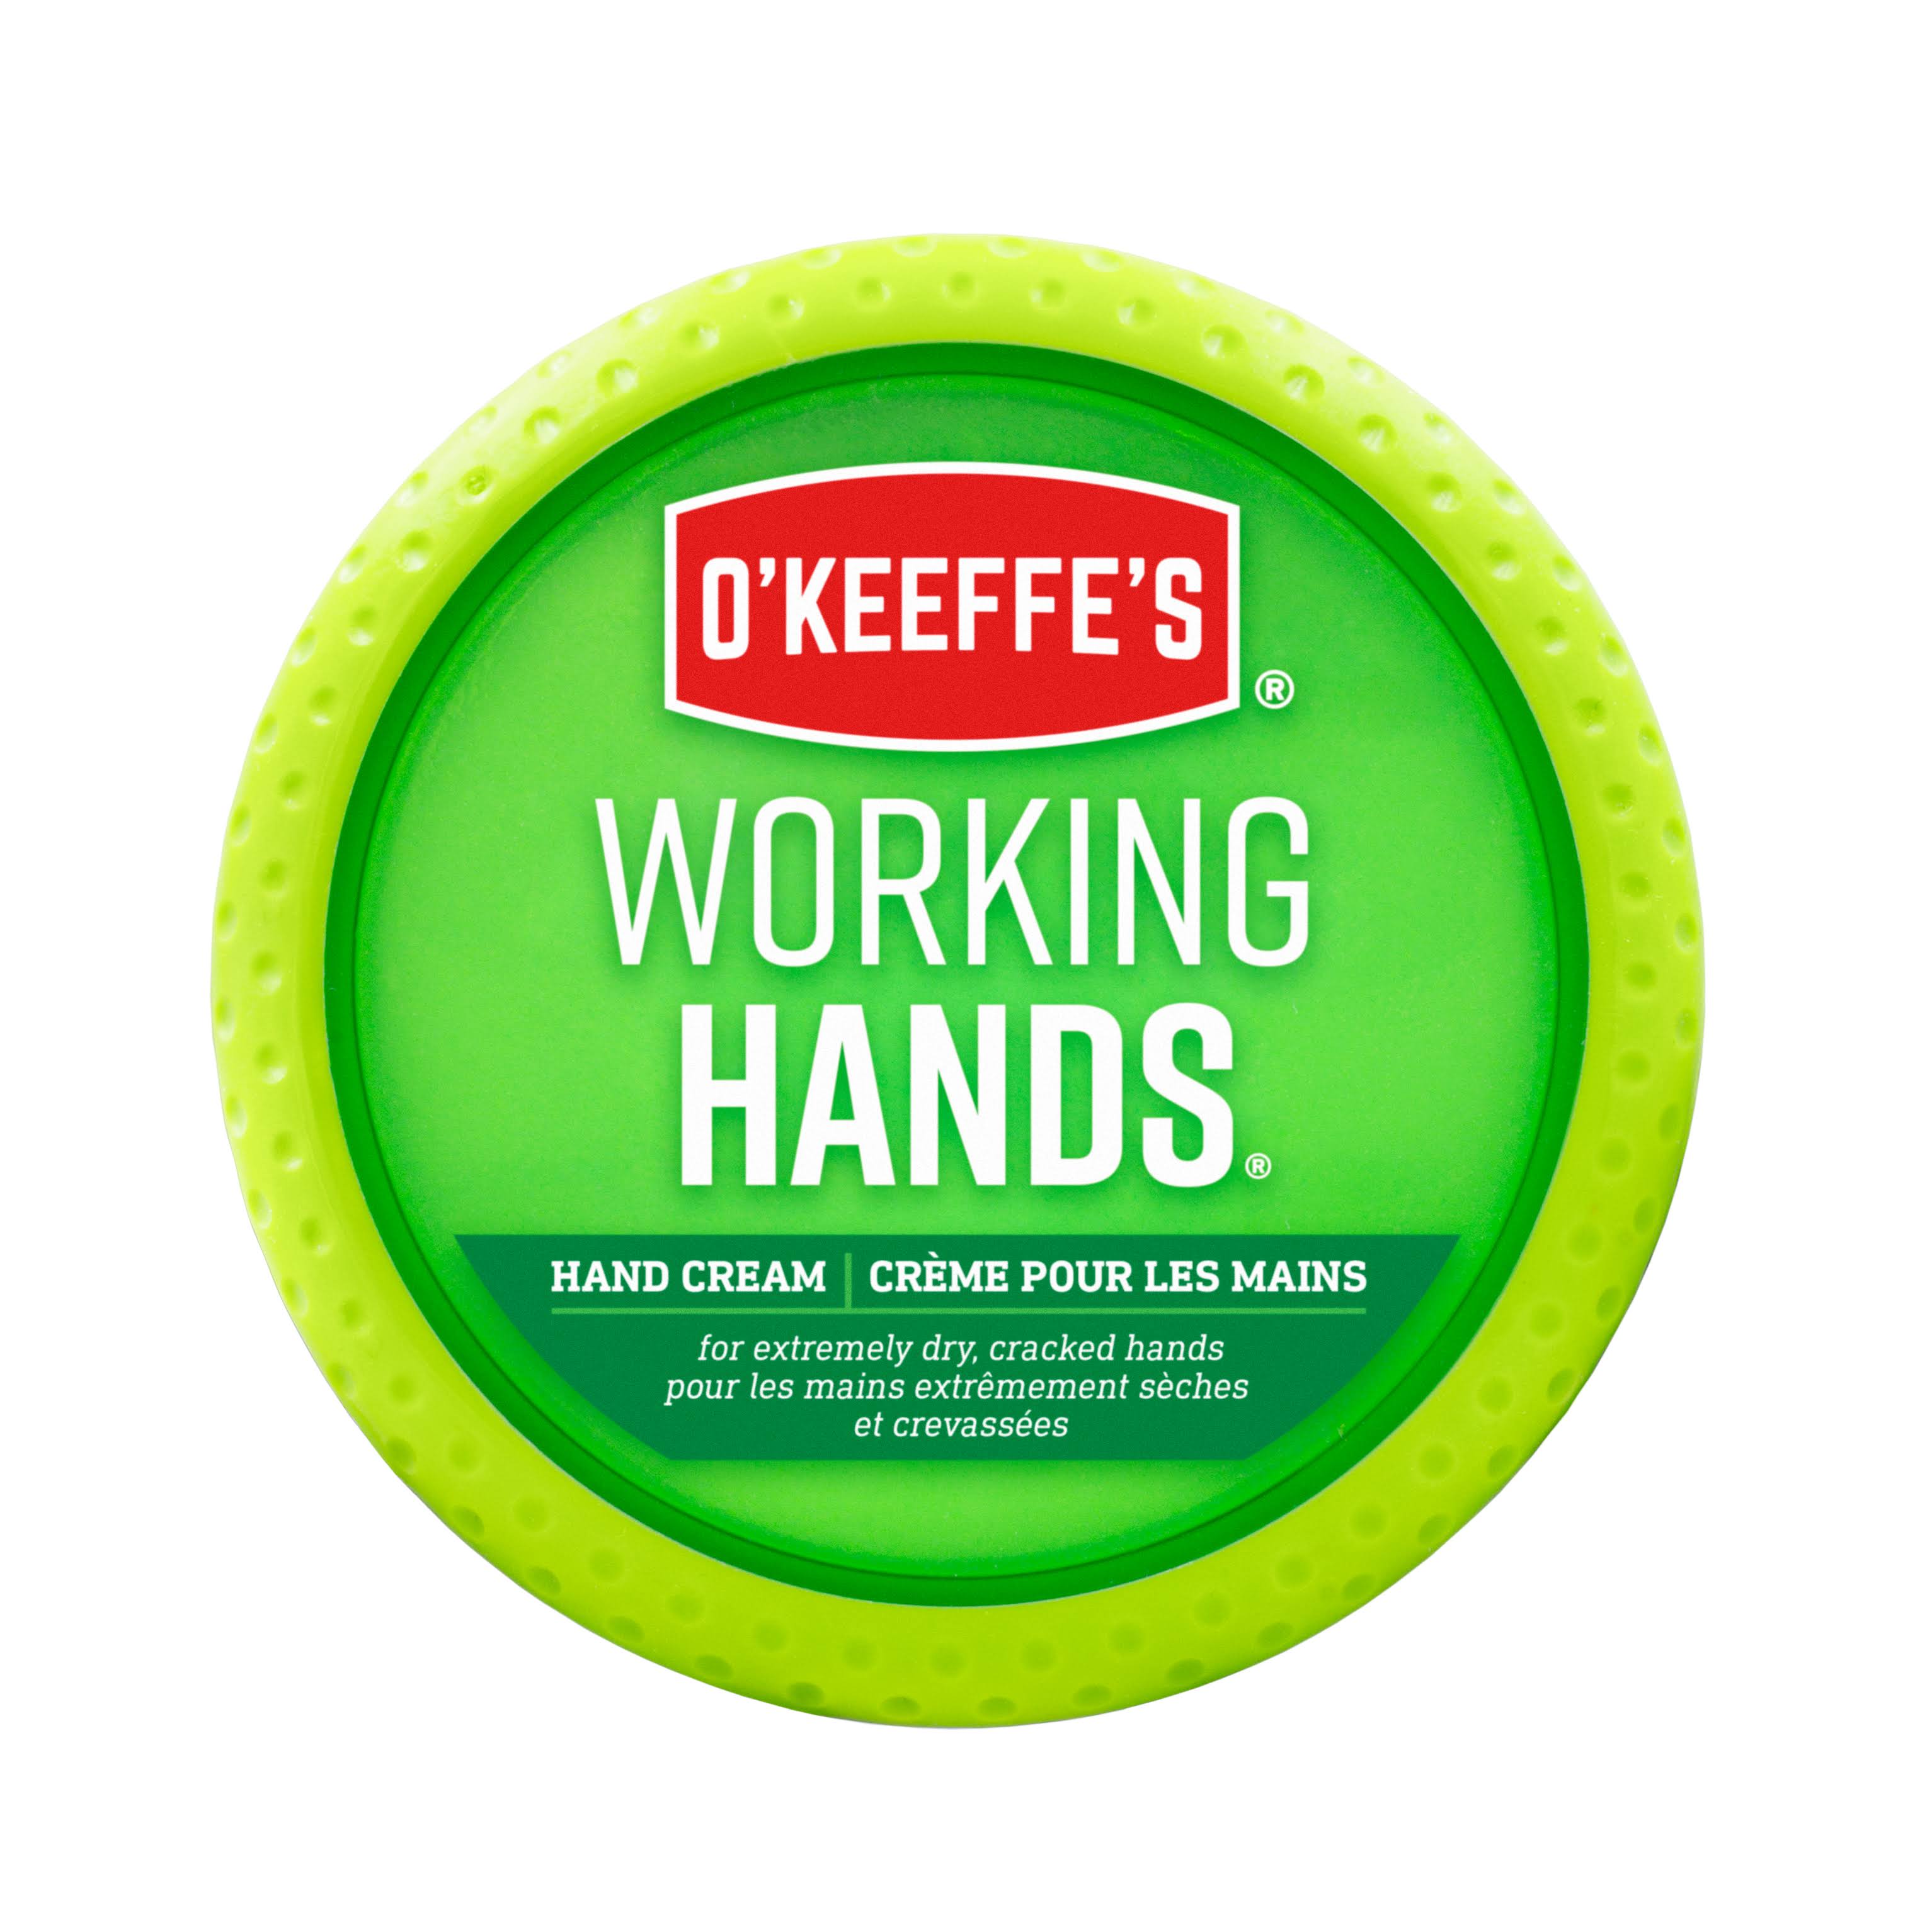 O'Keefers Working Hand Skin Moisturizer - 3.4oz